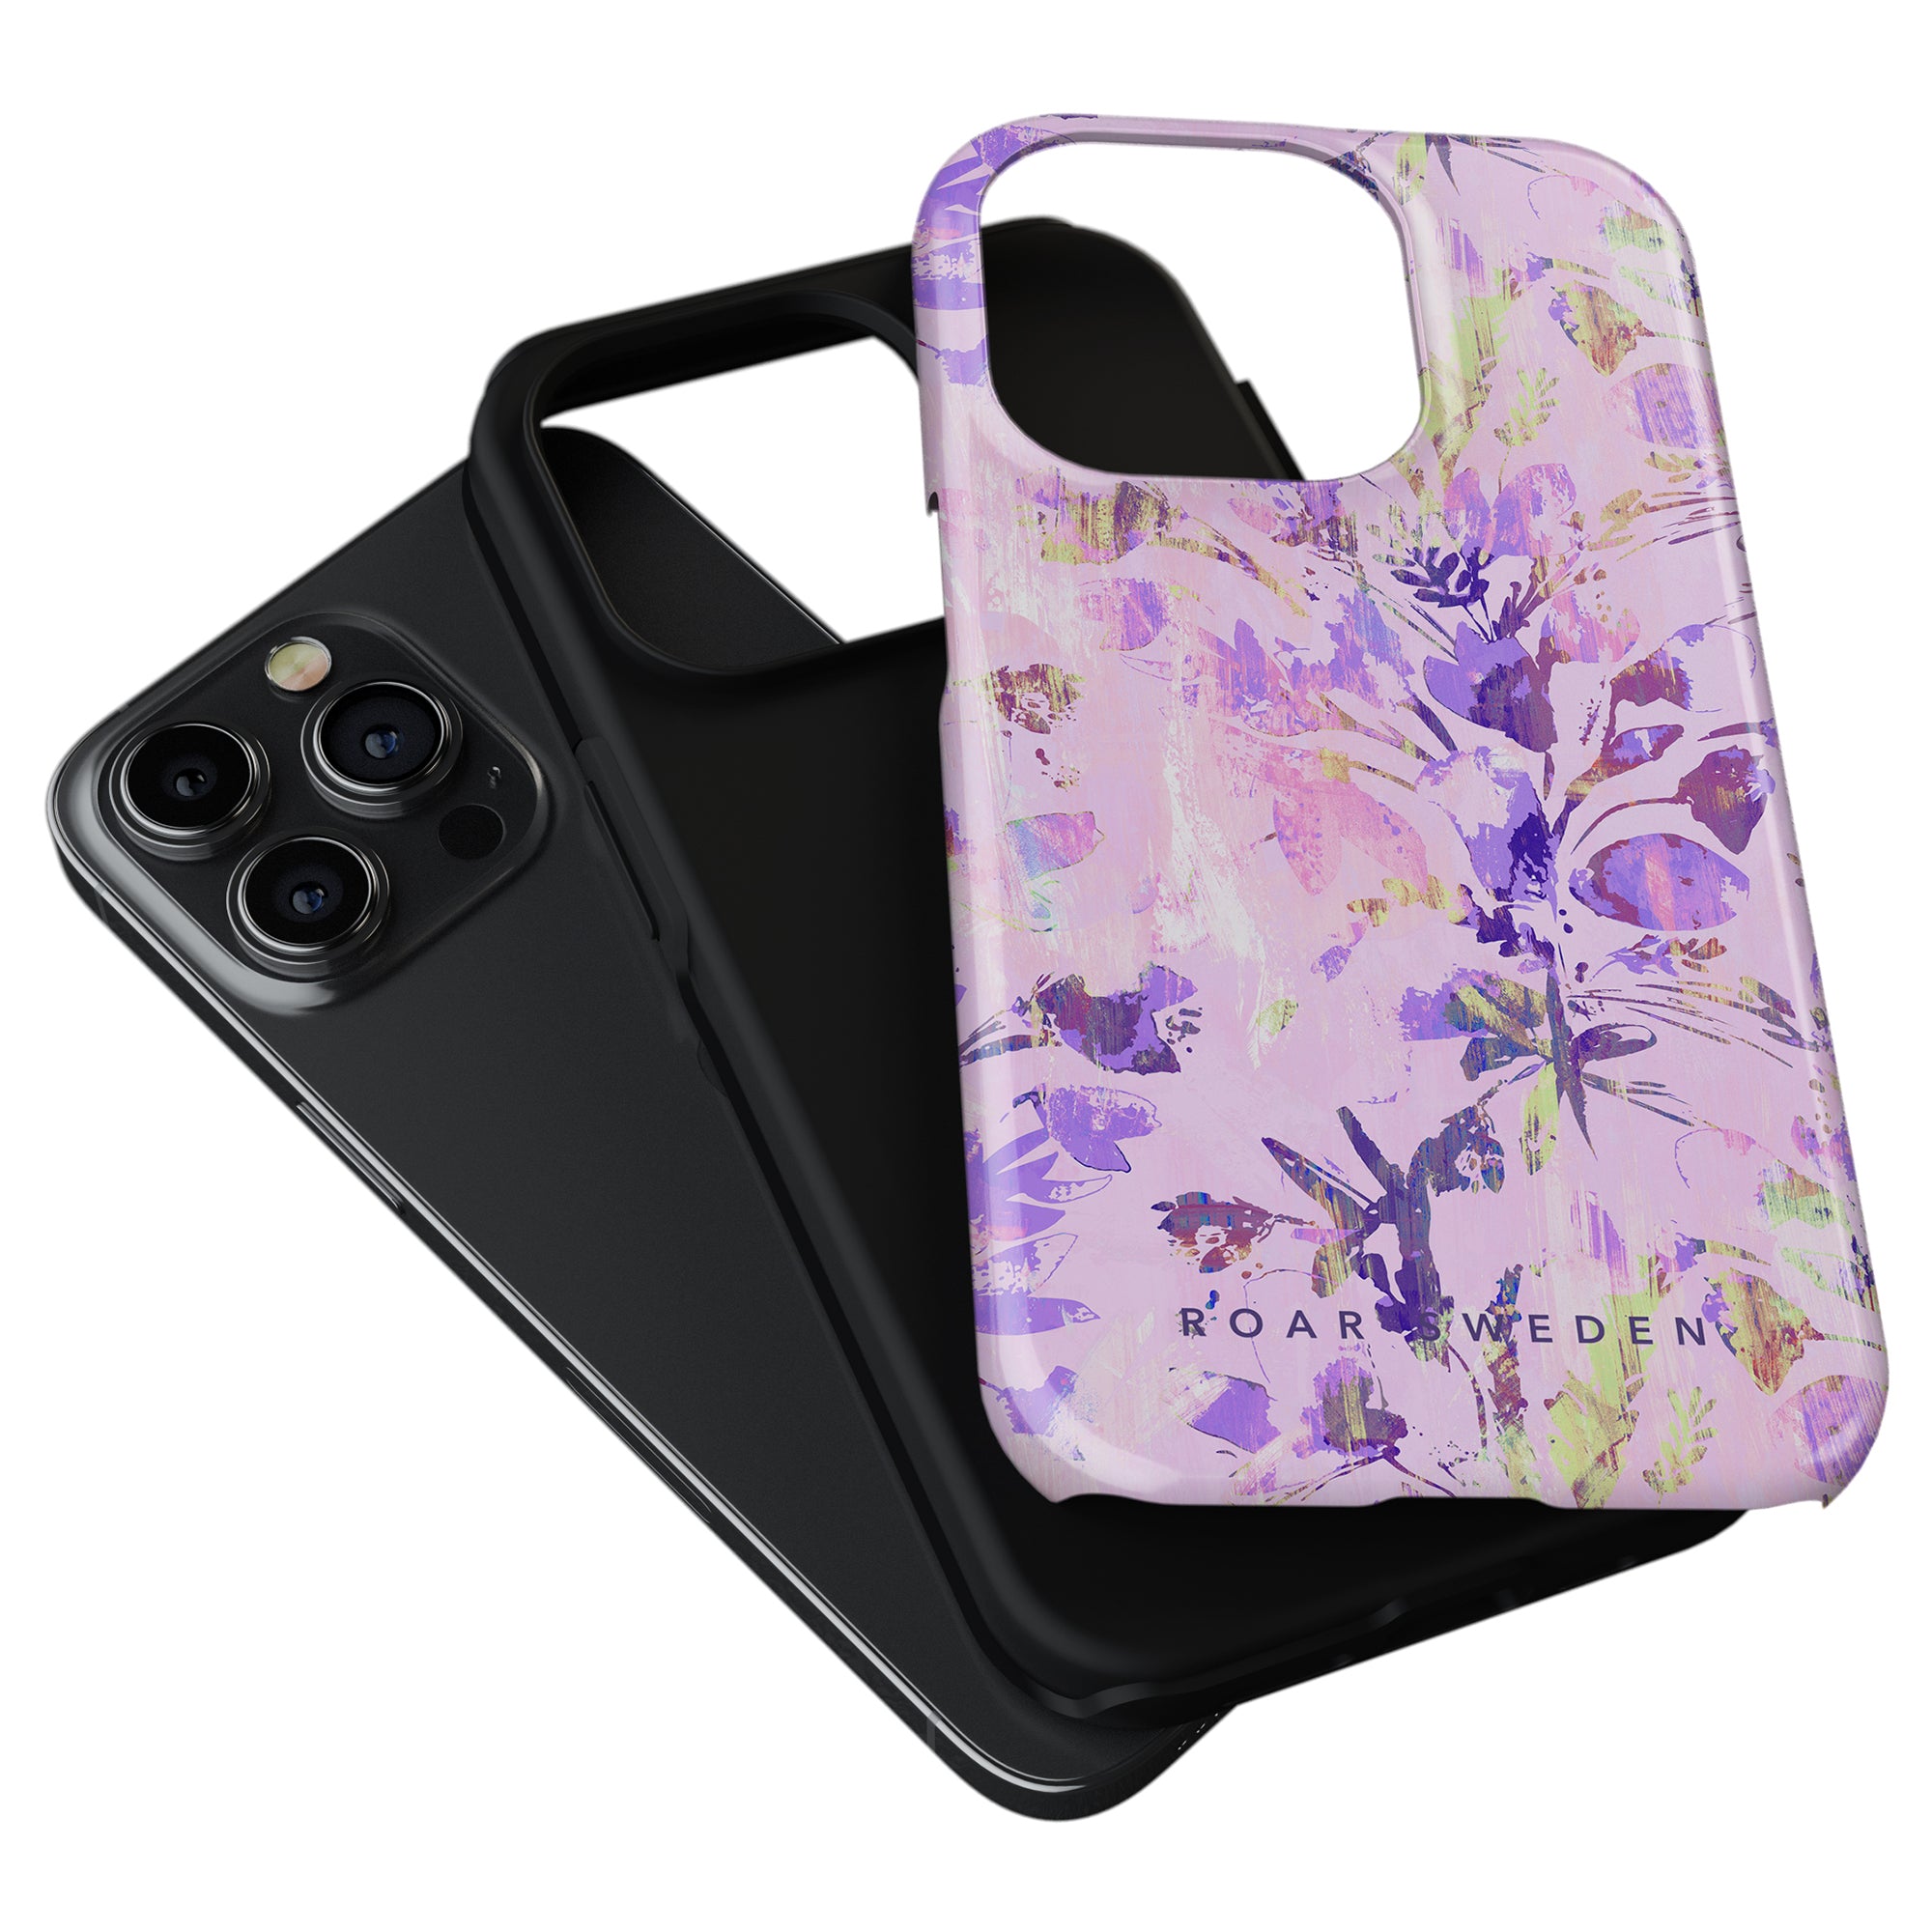 A black smartphone with a triple-camera setup alongside a Spring - Tough Case protective case.